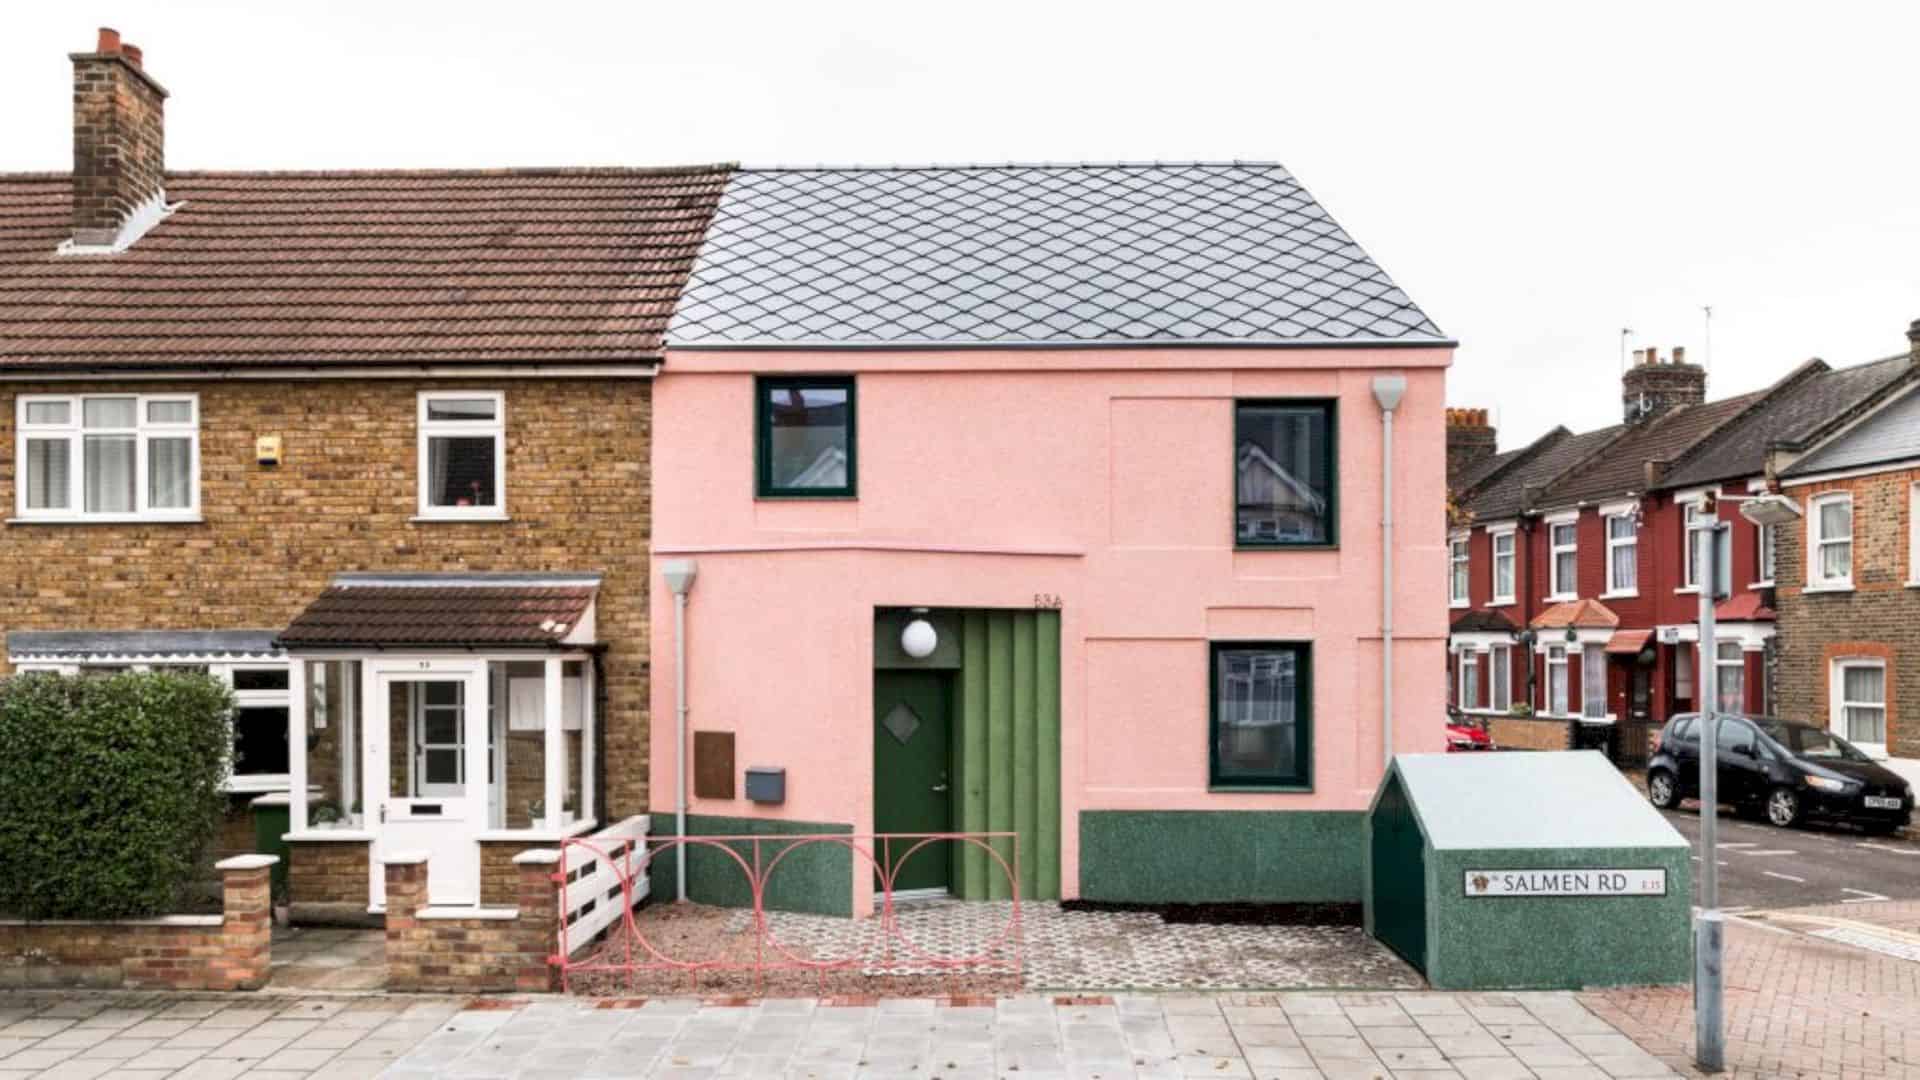 The Salmen House A Distincitve Pink And Green Rental Home In West Ham 8